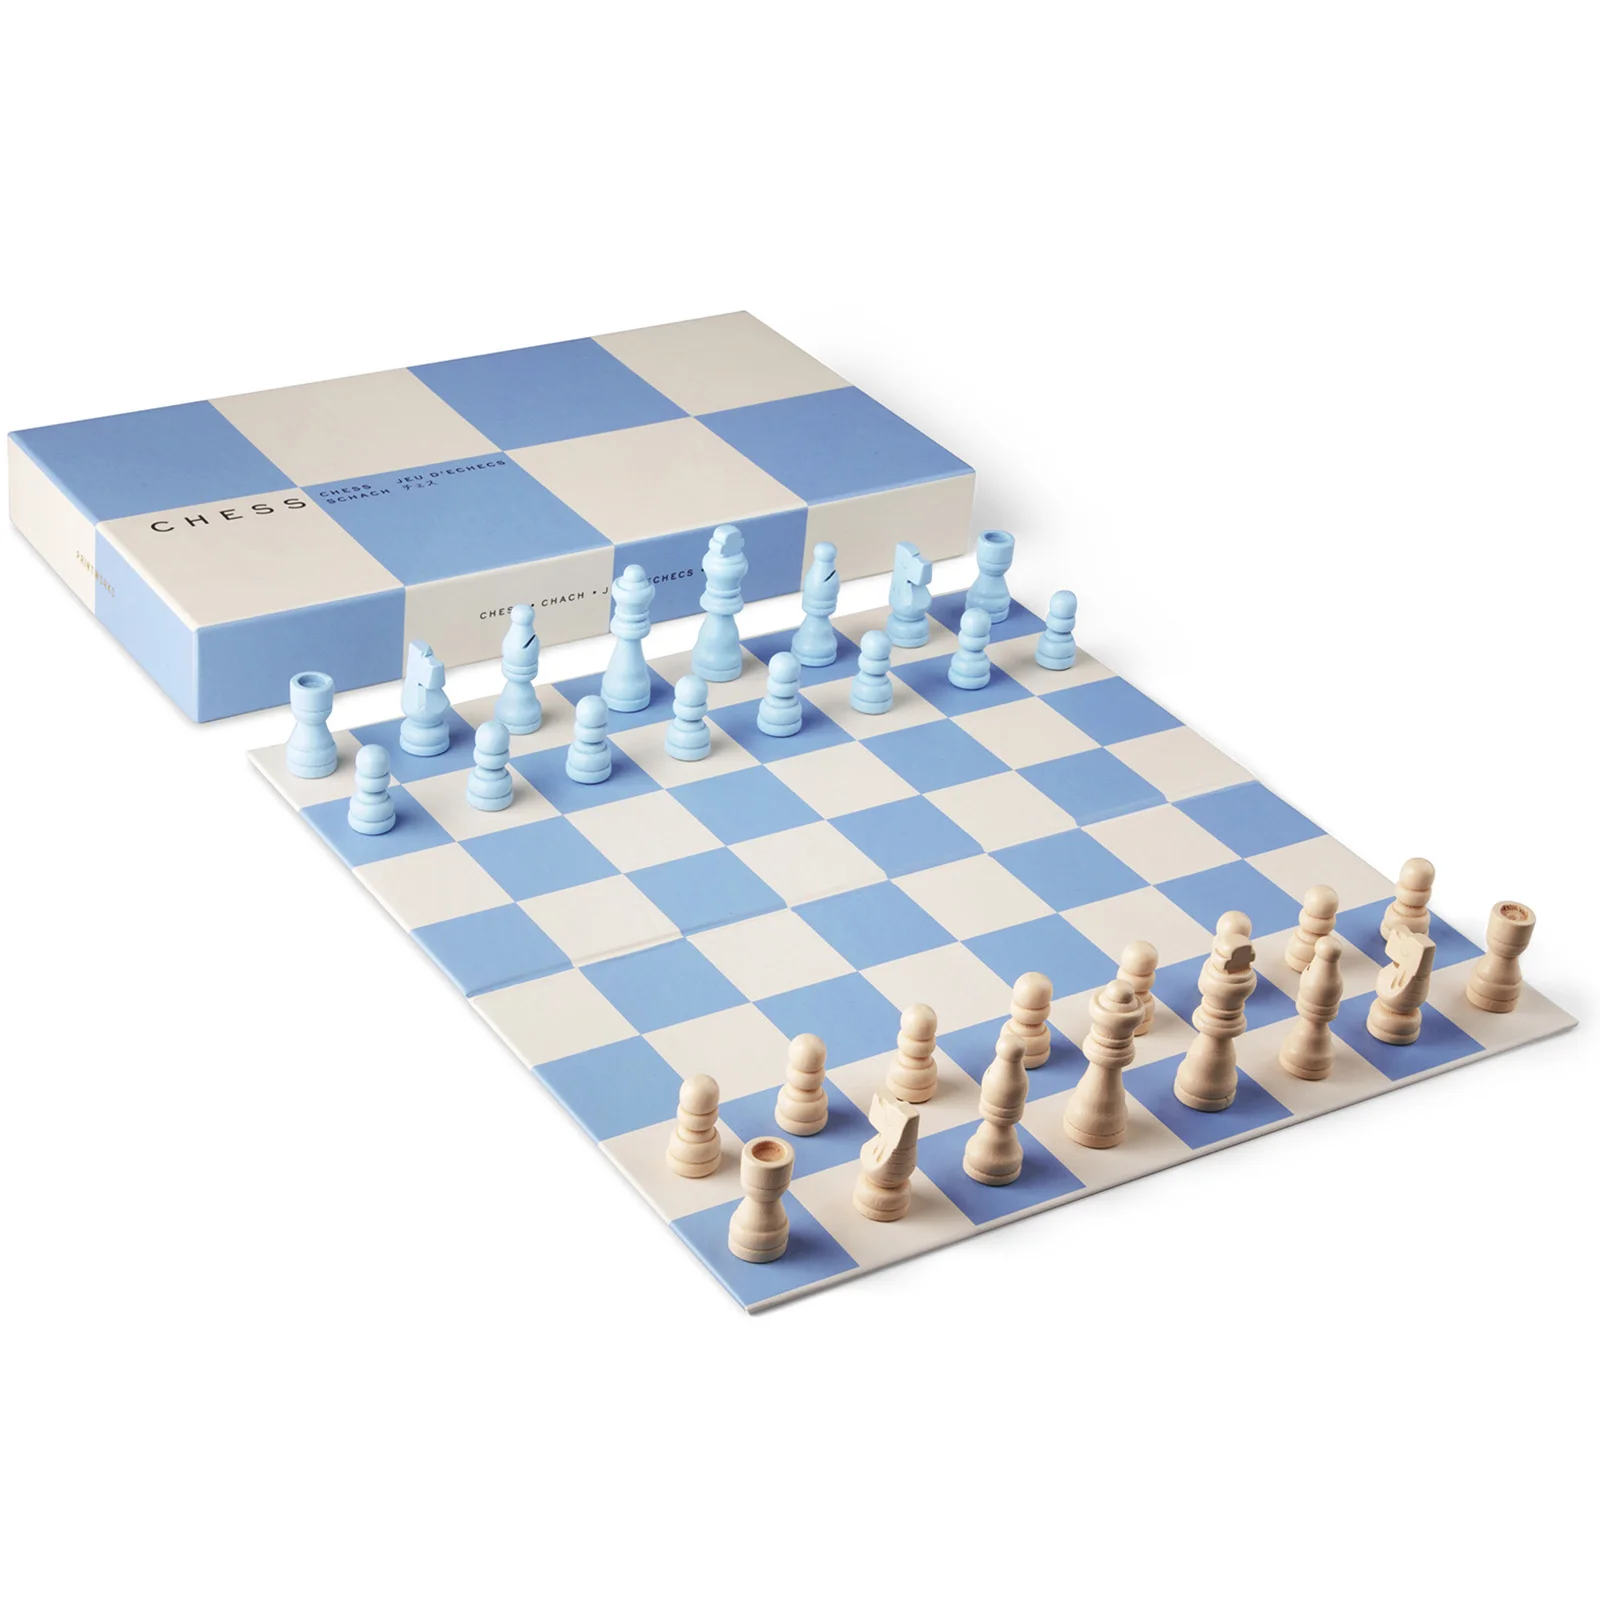 Printworks PLAY Chess Set Image 1